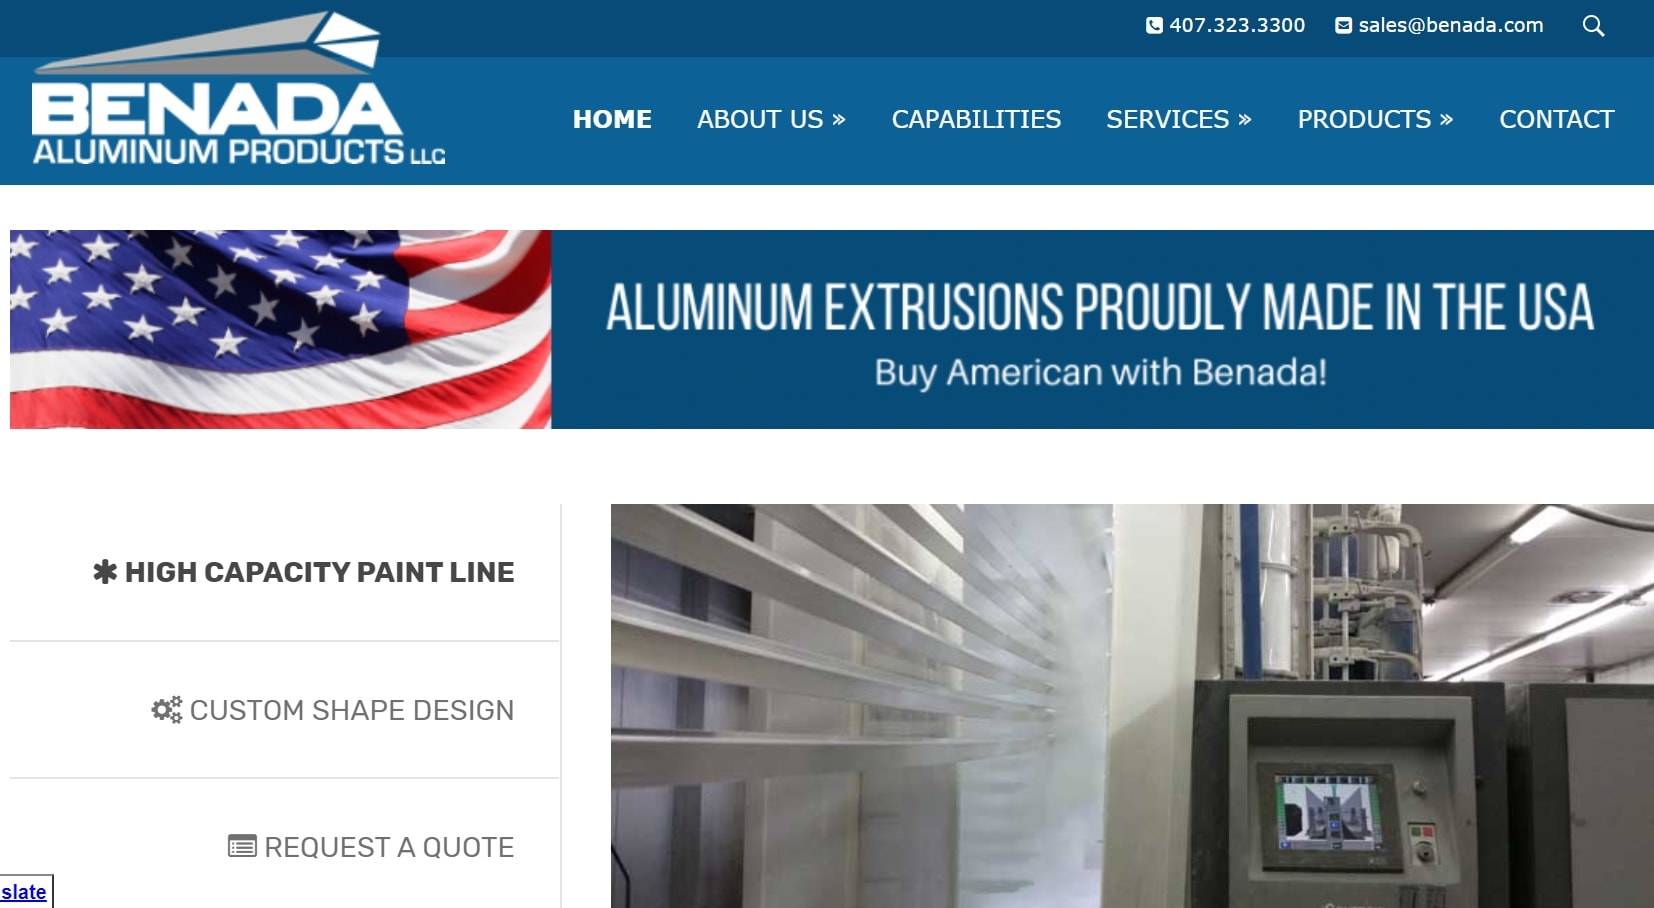 Benada Aluminum Products